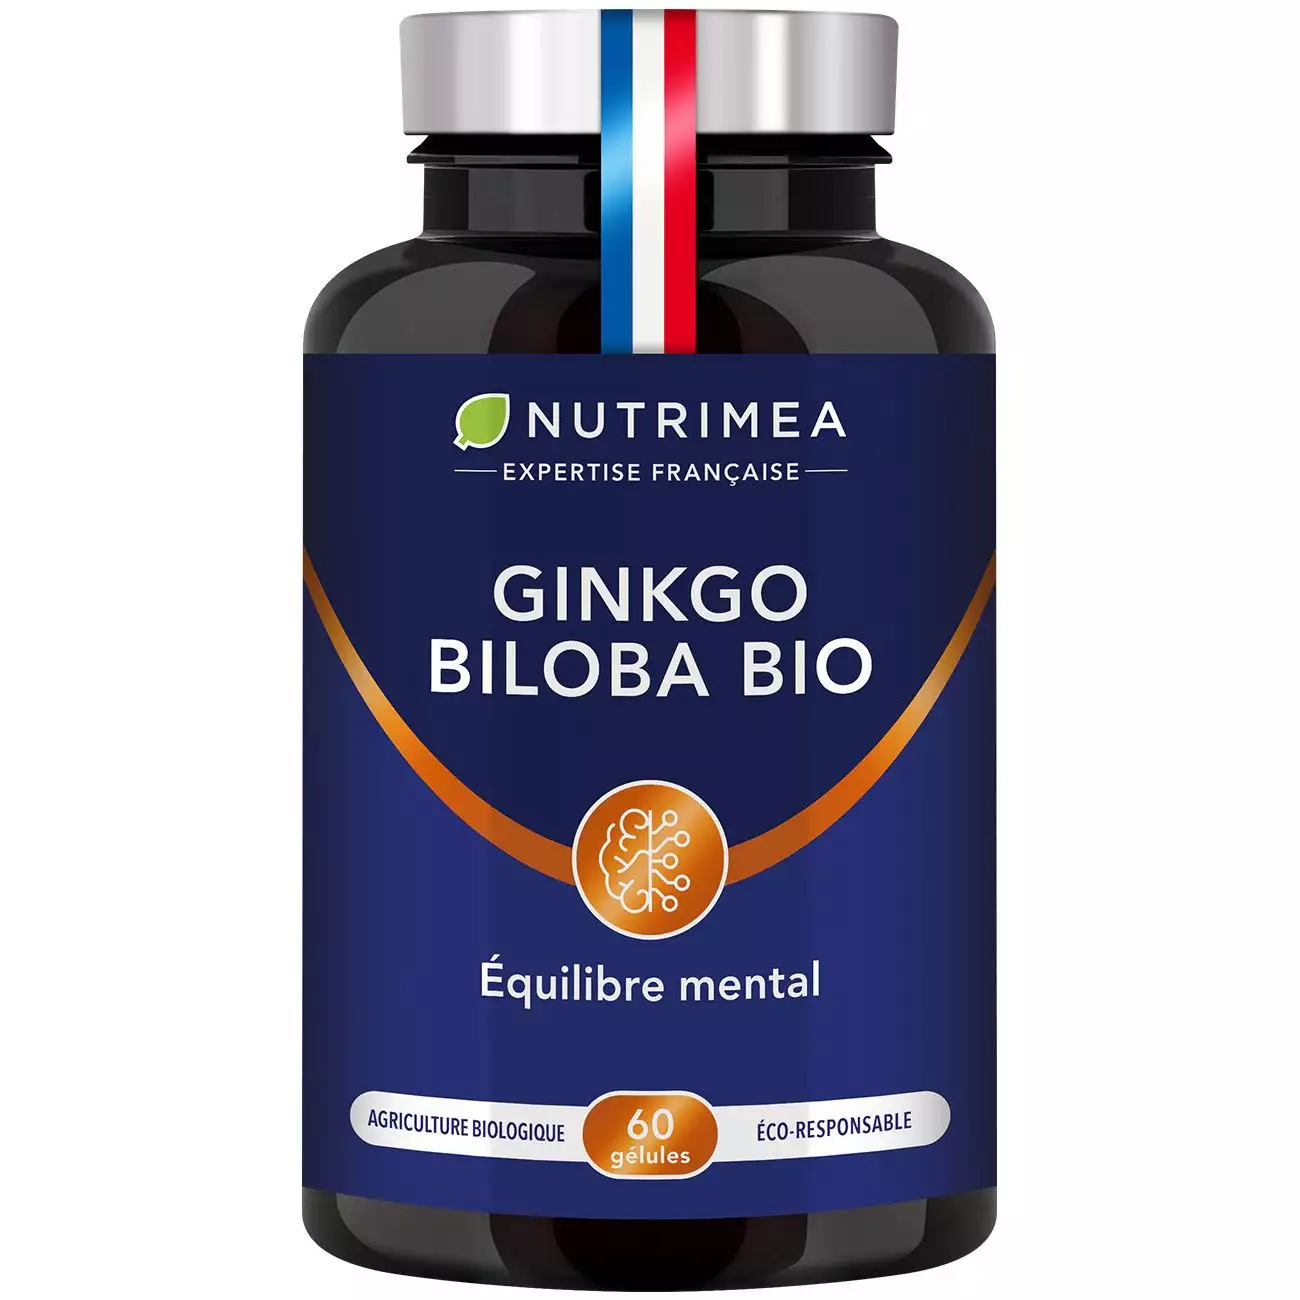 Fond blanc du pilulier de Ginkgo Biloba Bio